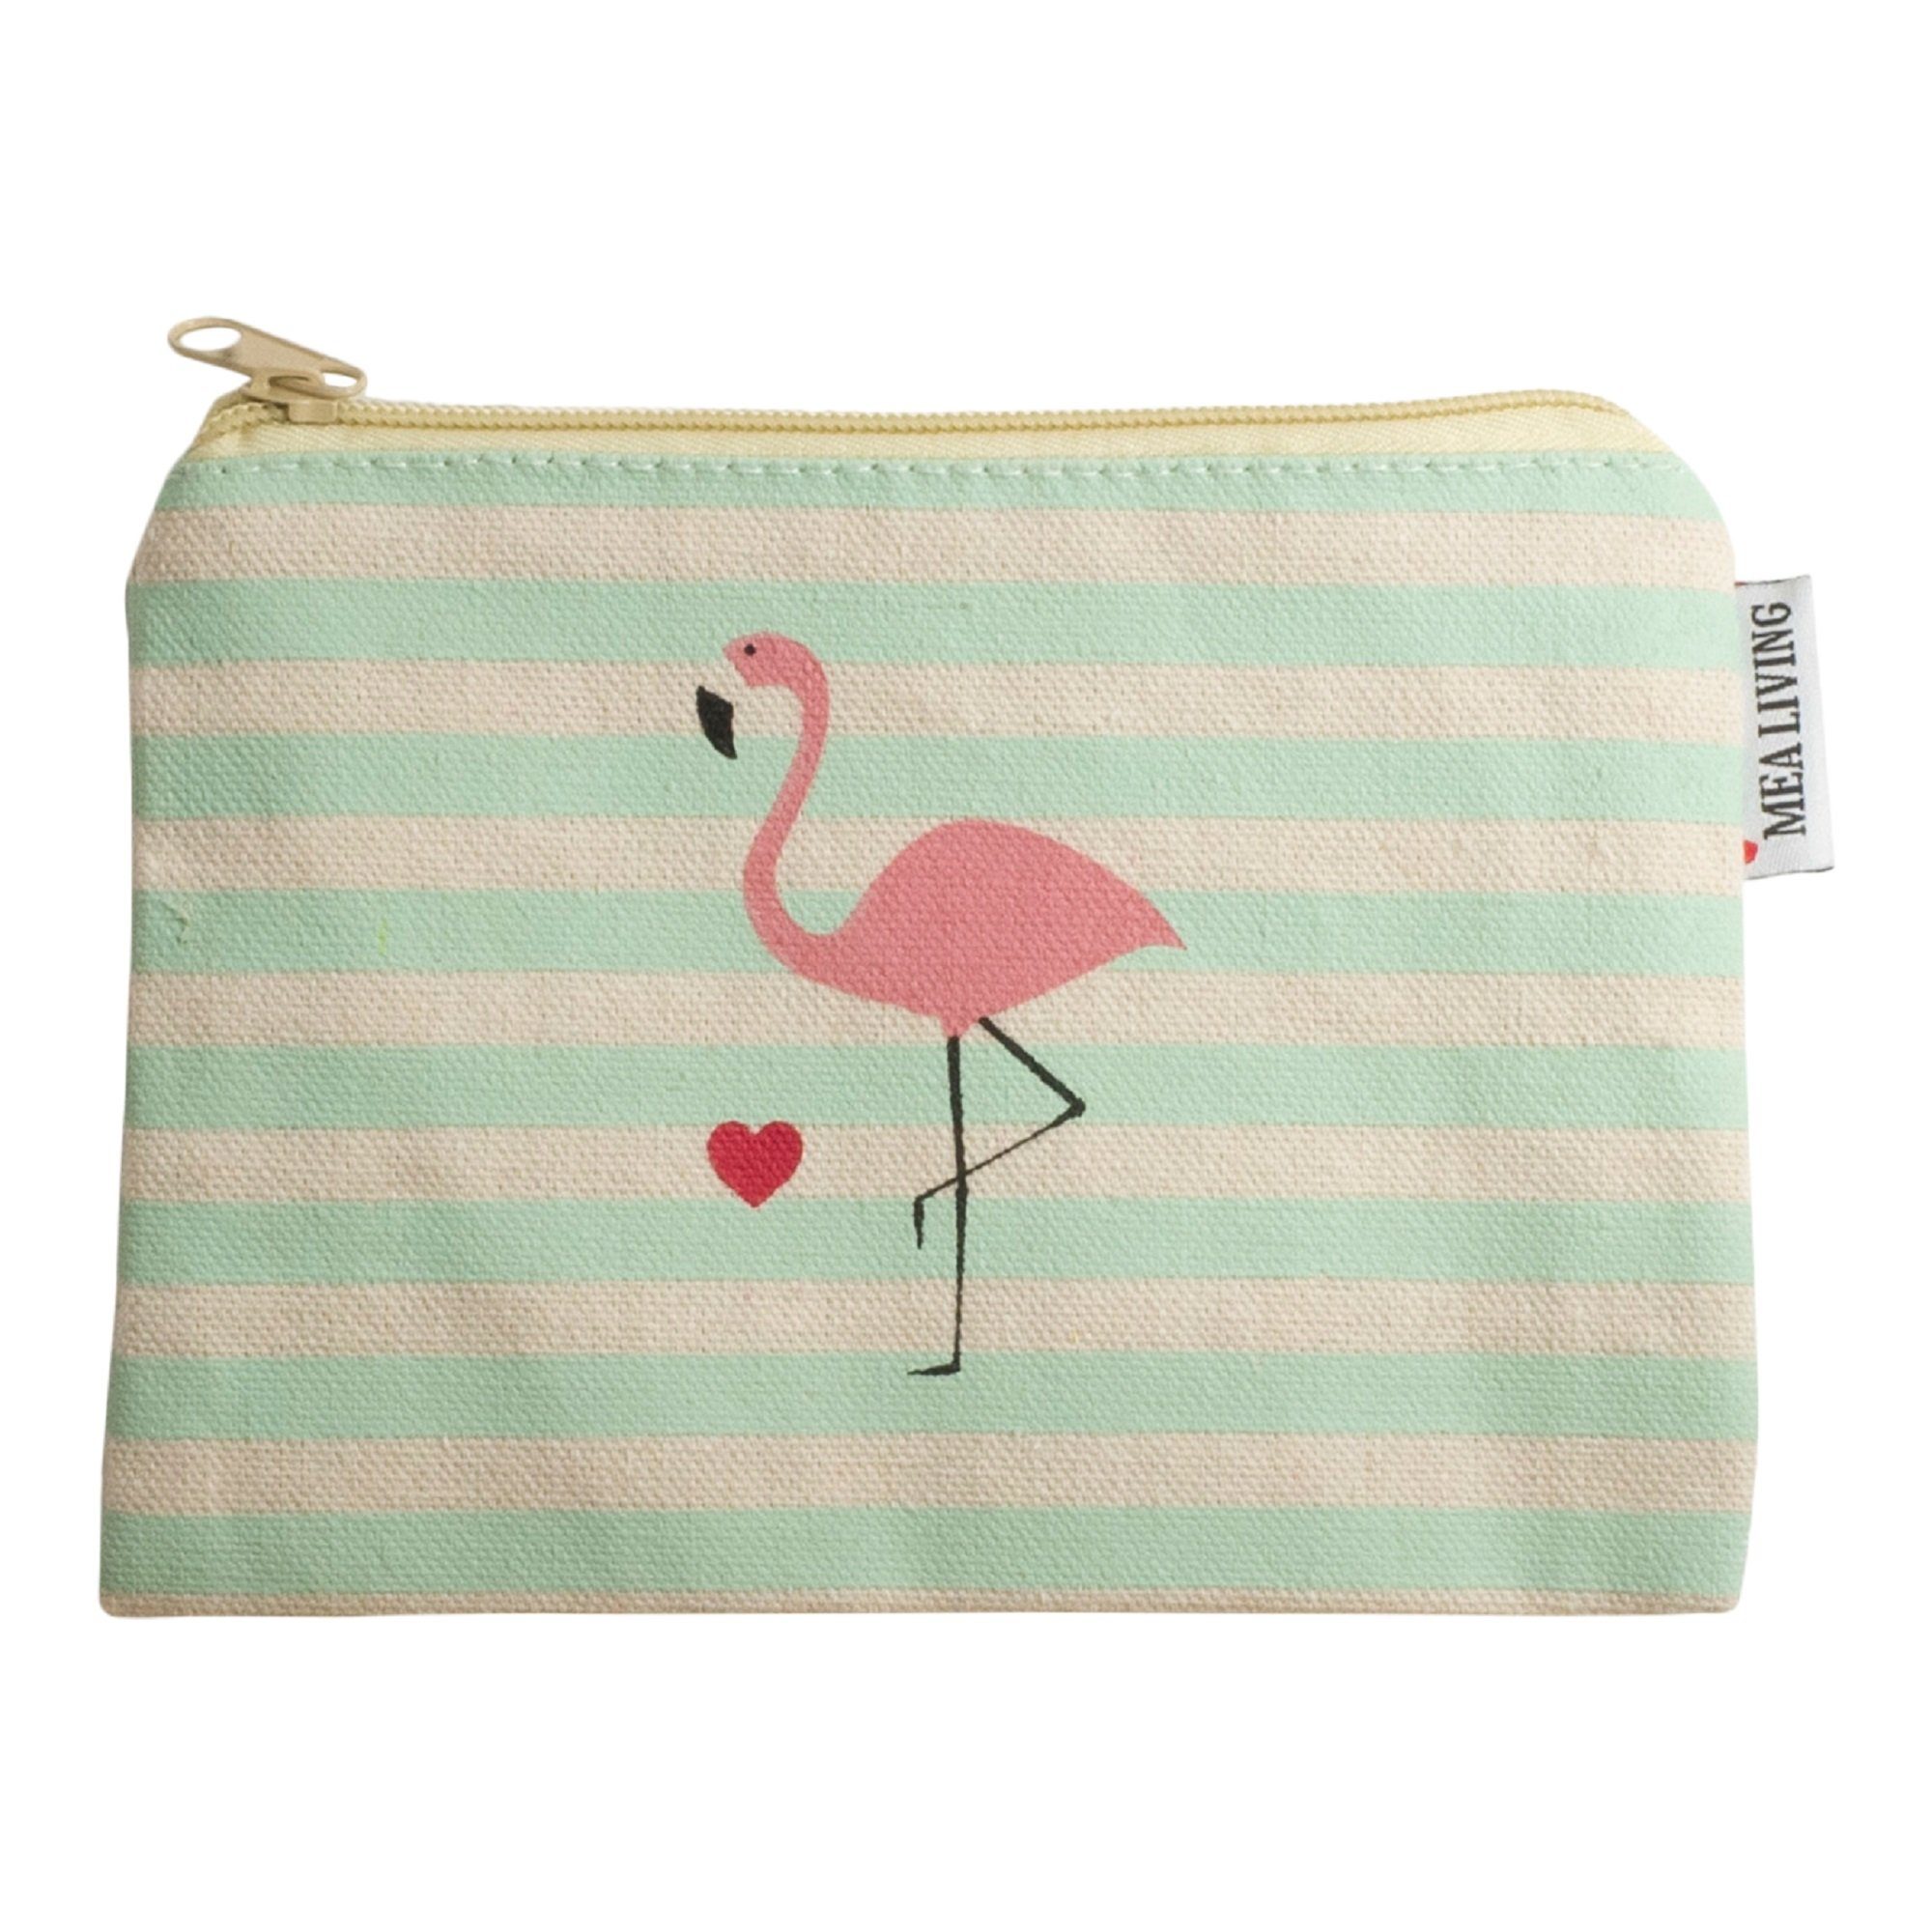 MEA LIVING Tasche MEA "Flamingo" Aufbewahrungs Kultur Schreibgeräteetui LIVING kleine Kosmetik Beutel Schmink